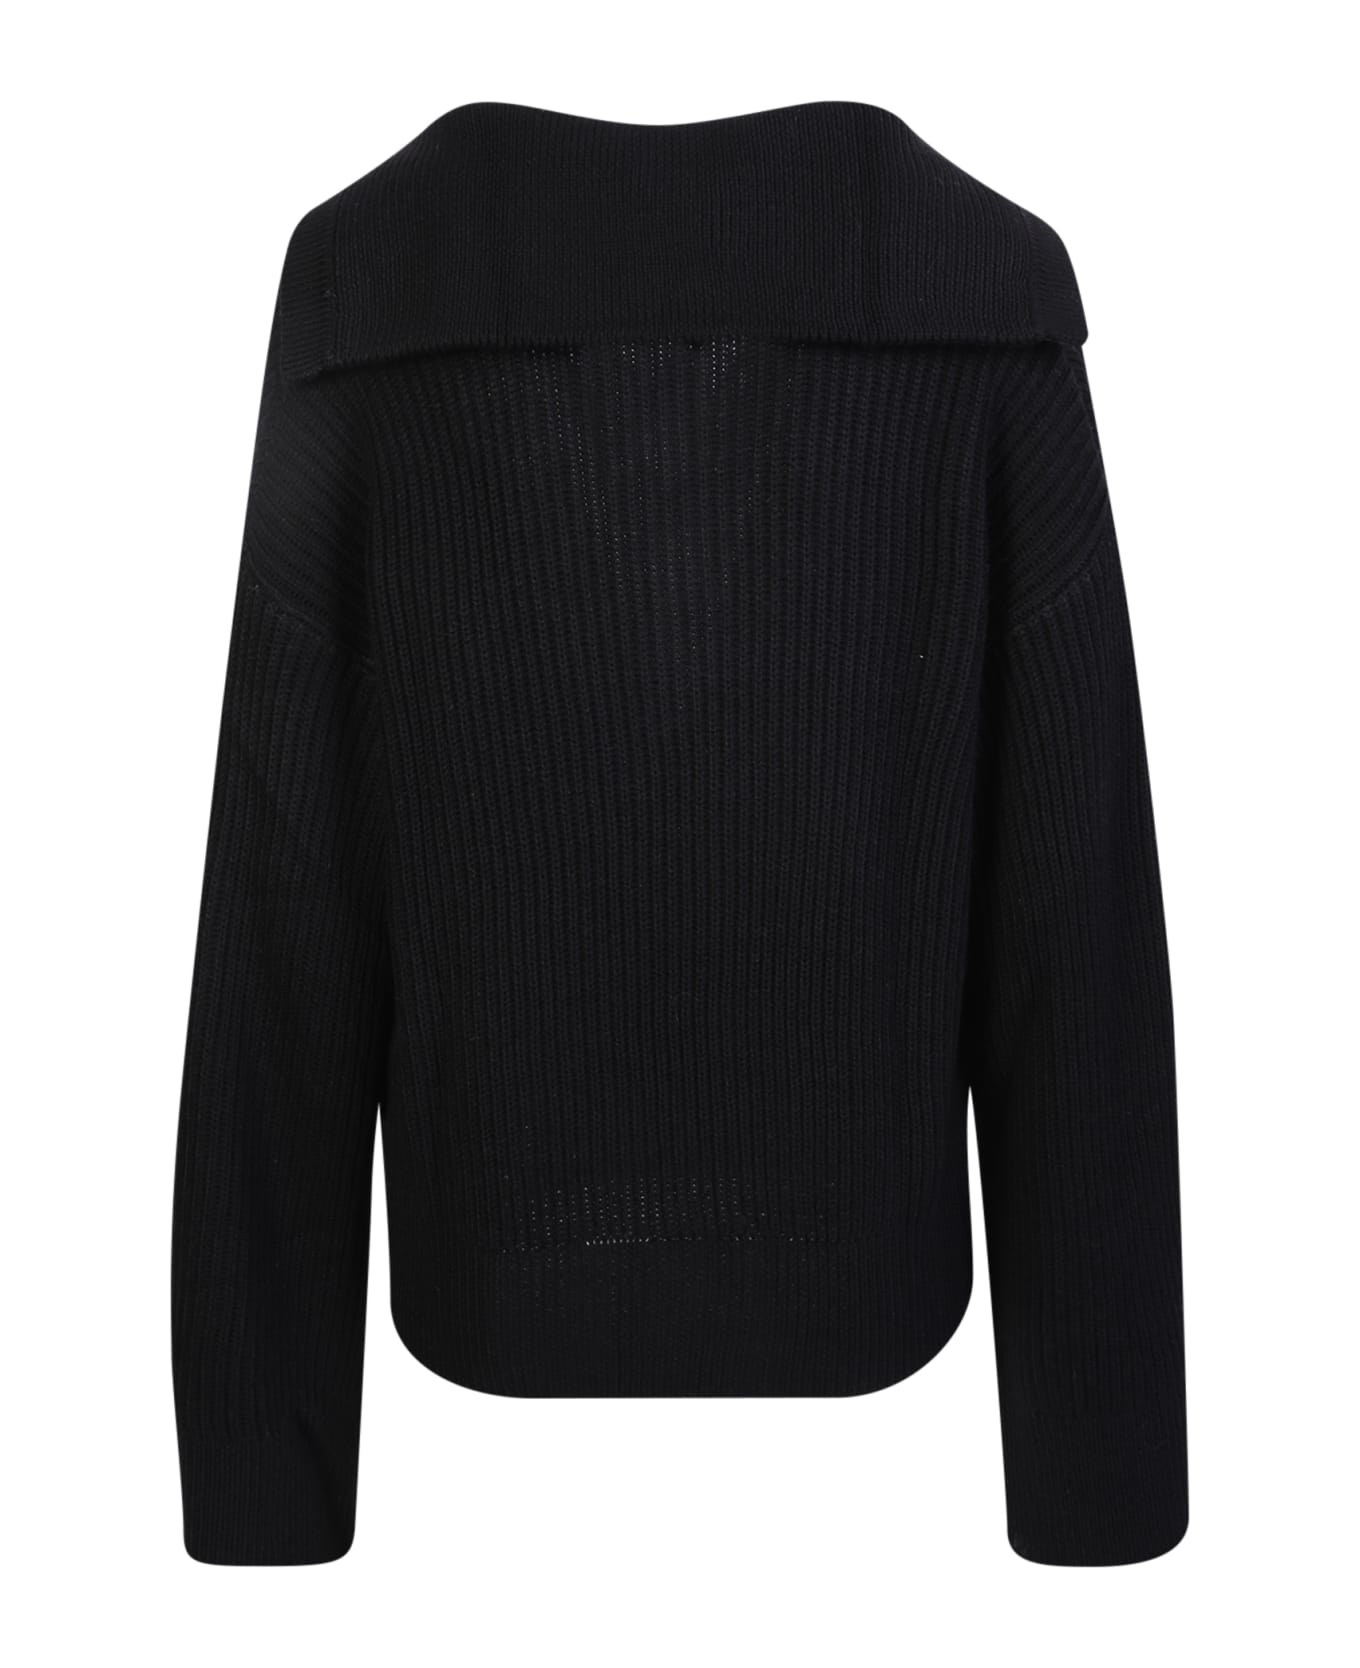 Liu-Jo Liu Jo Black Knit Sweater With Gold Buttons - Black ニットウェア